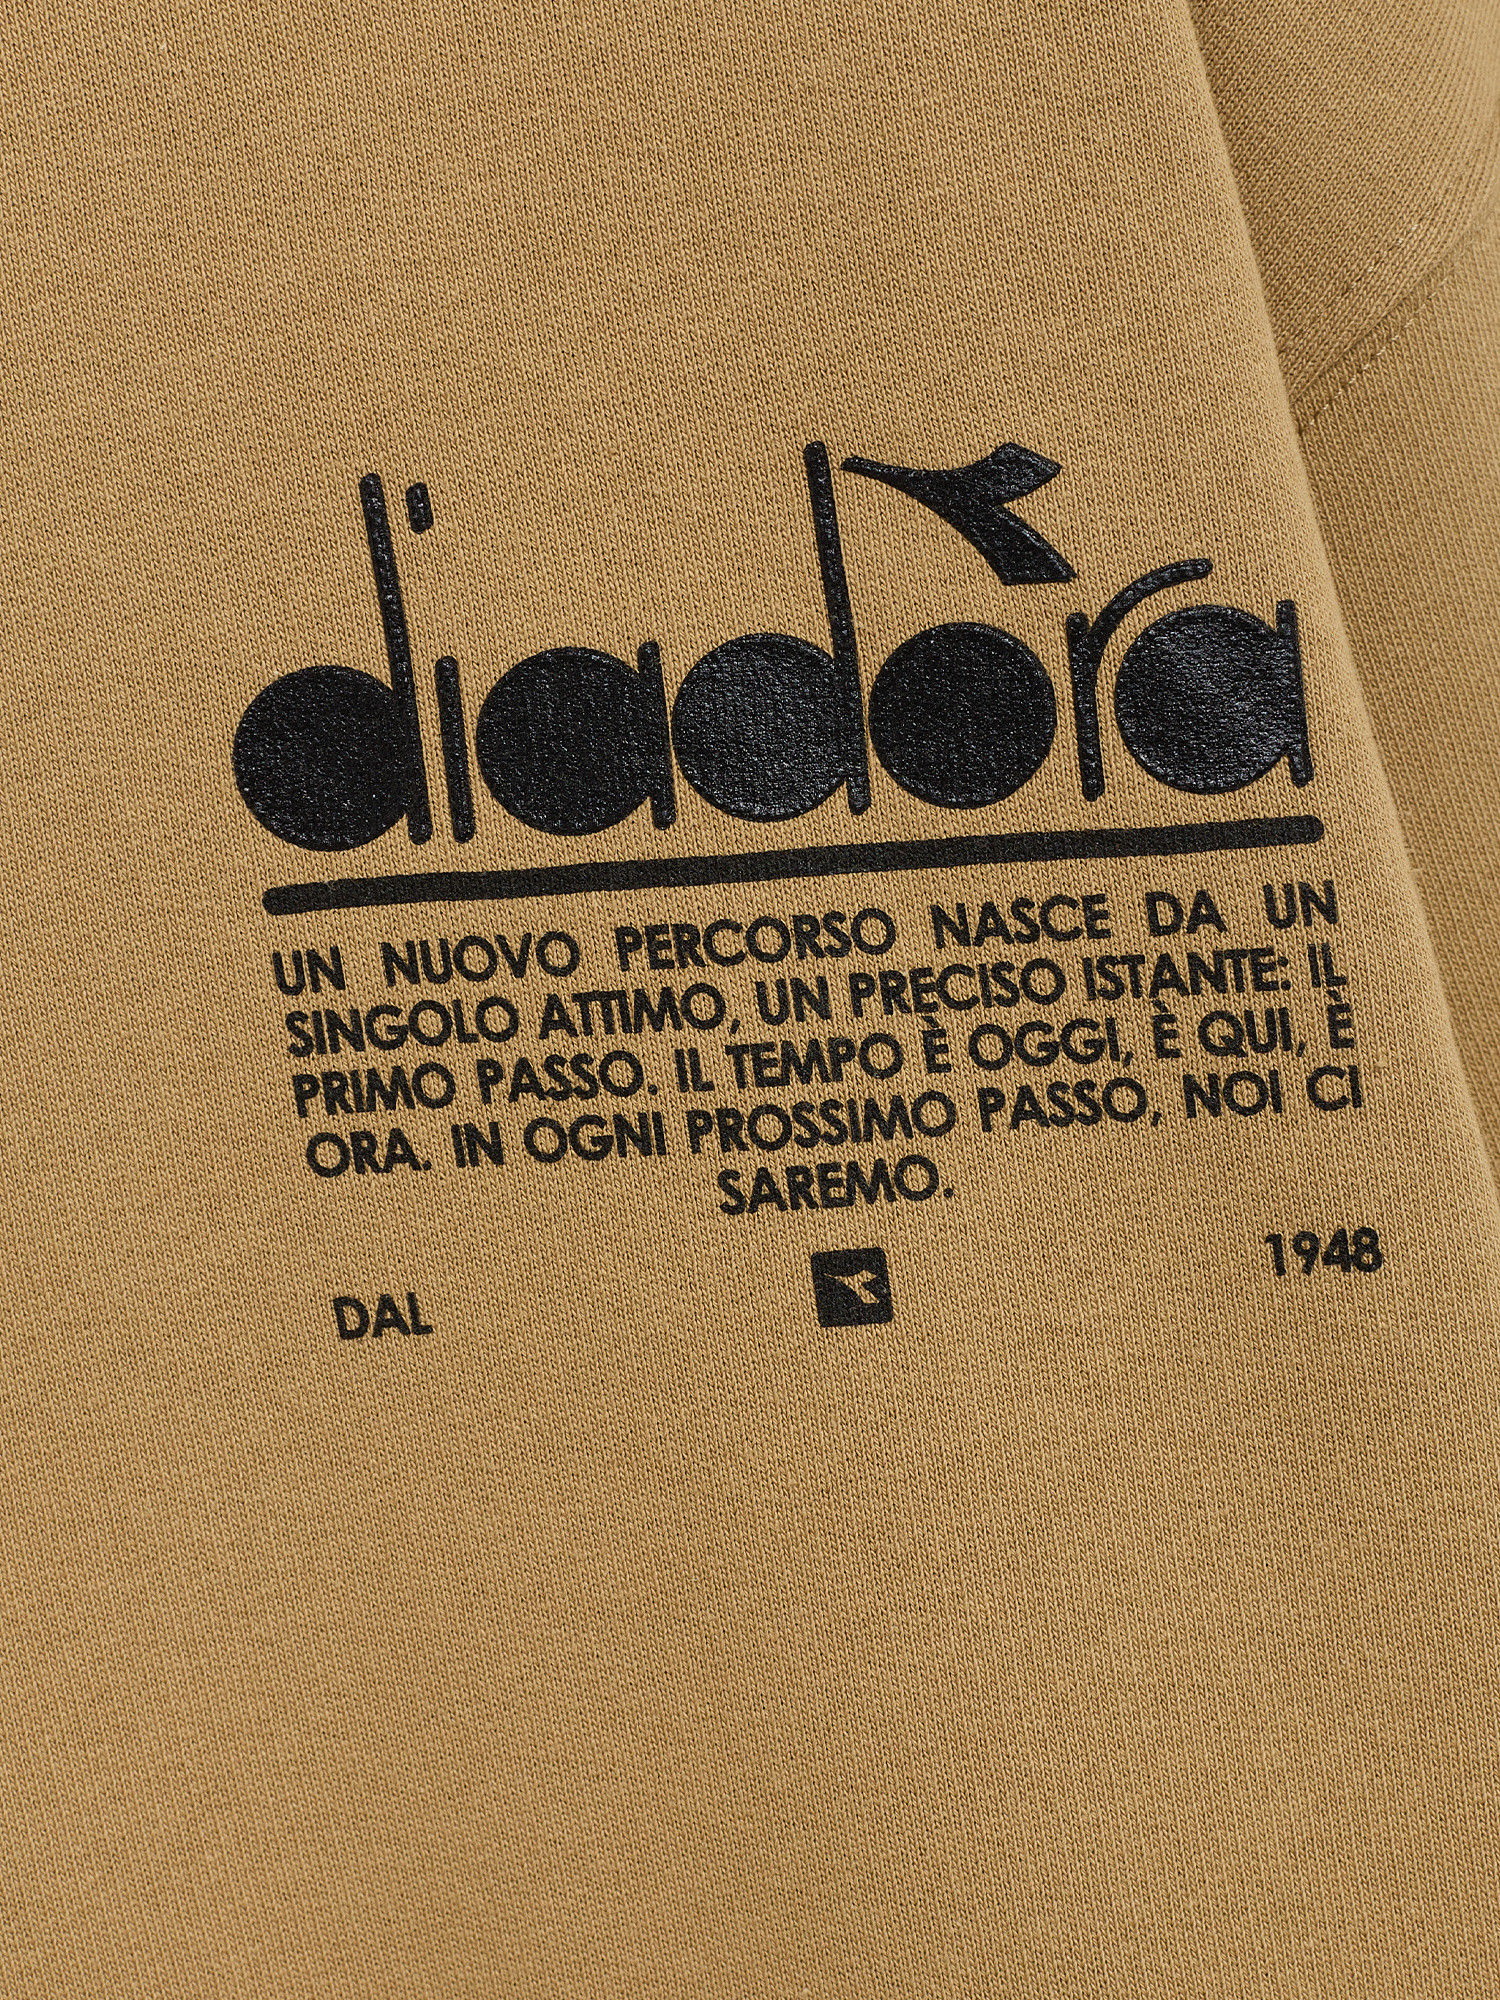 Diadora - Felpa Manifesto con cappuccio in cotone, Beige, large image number 1